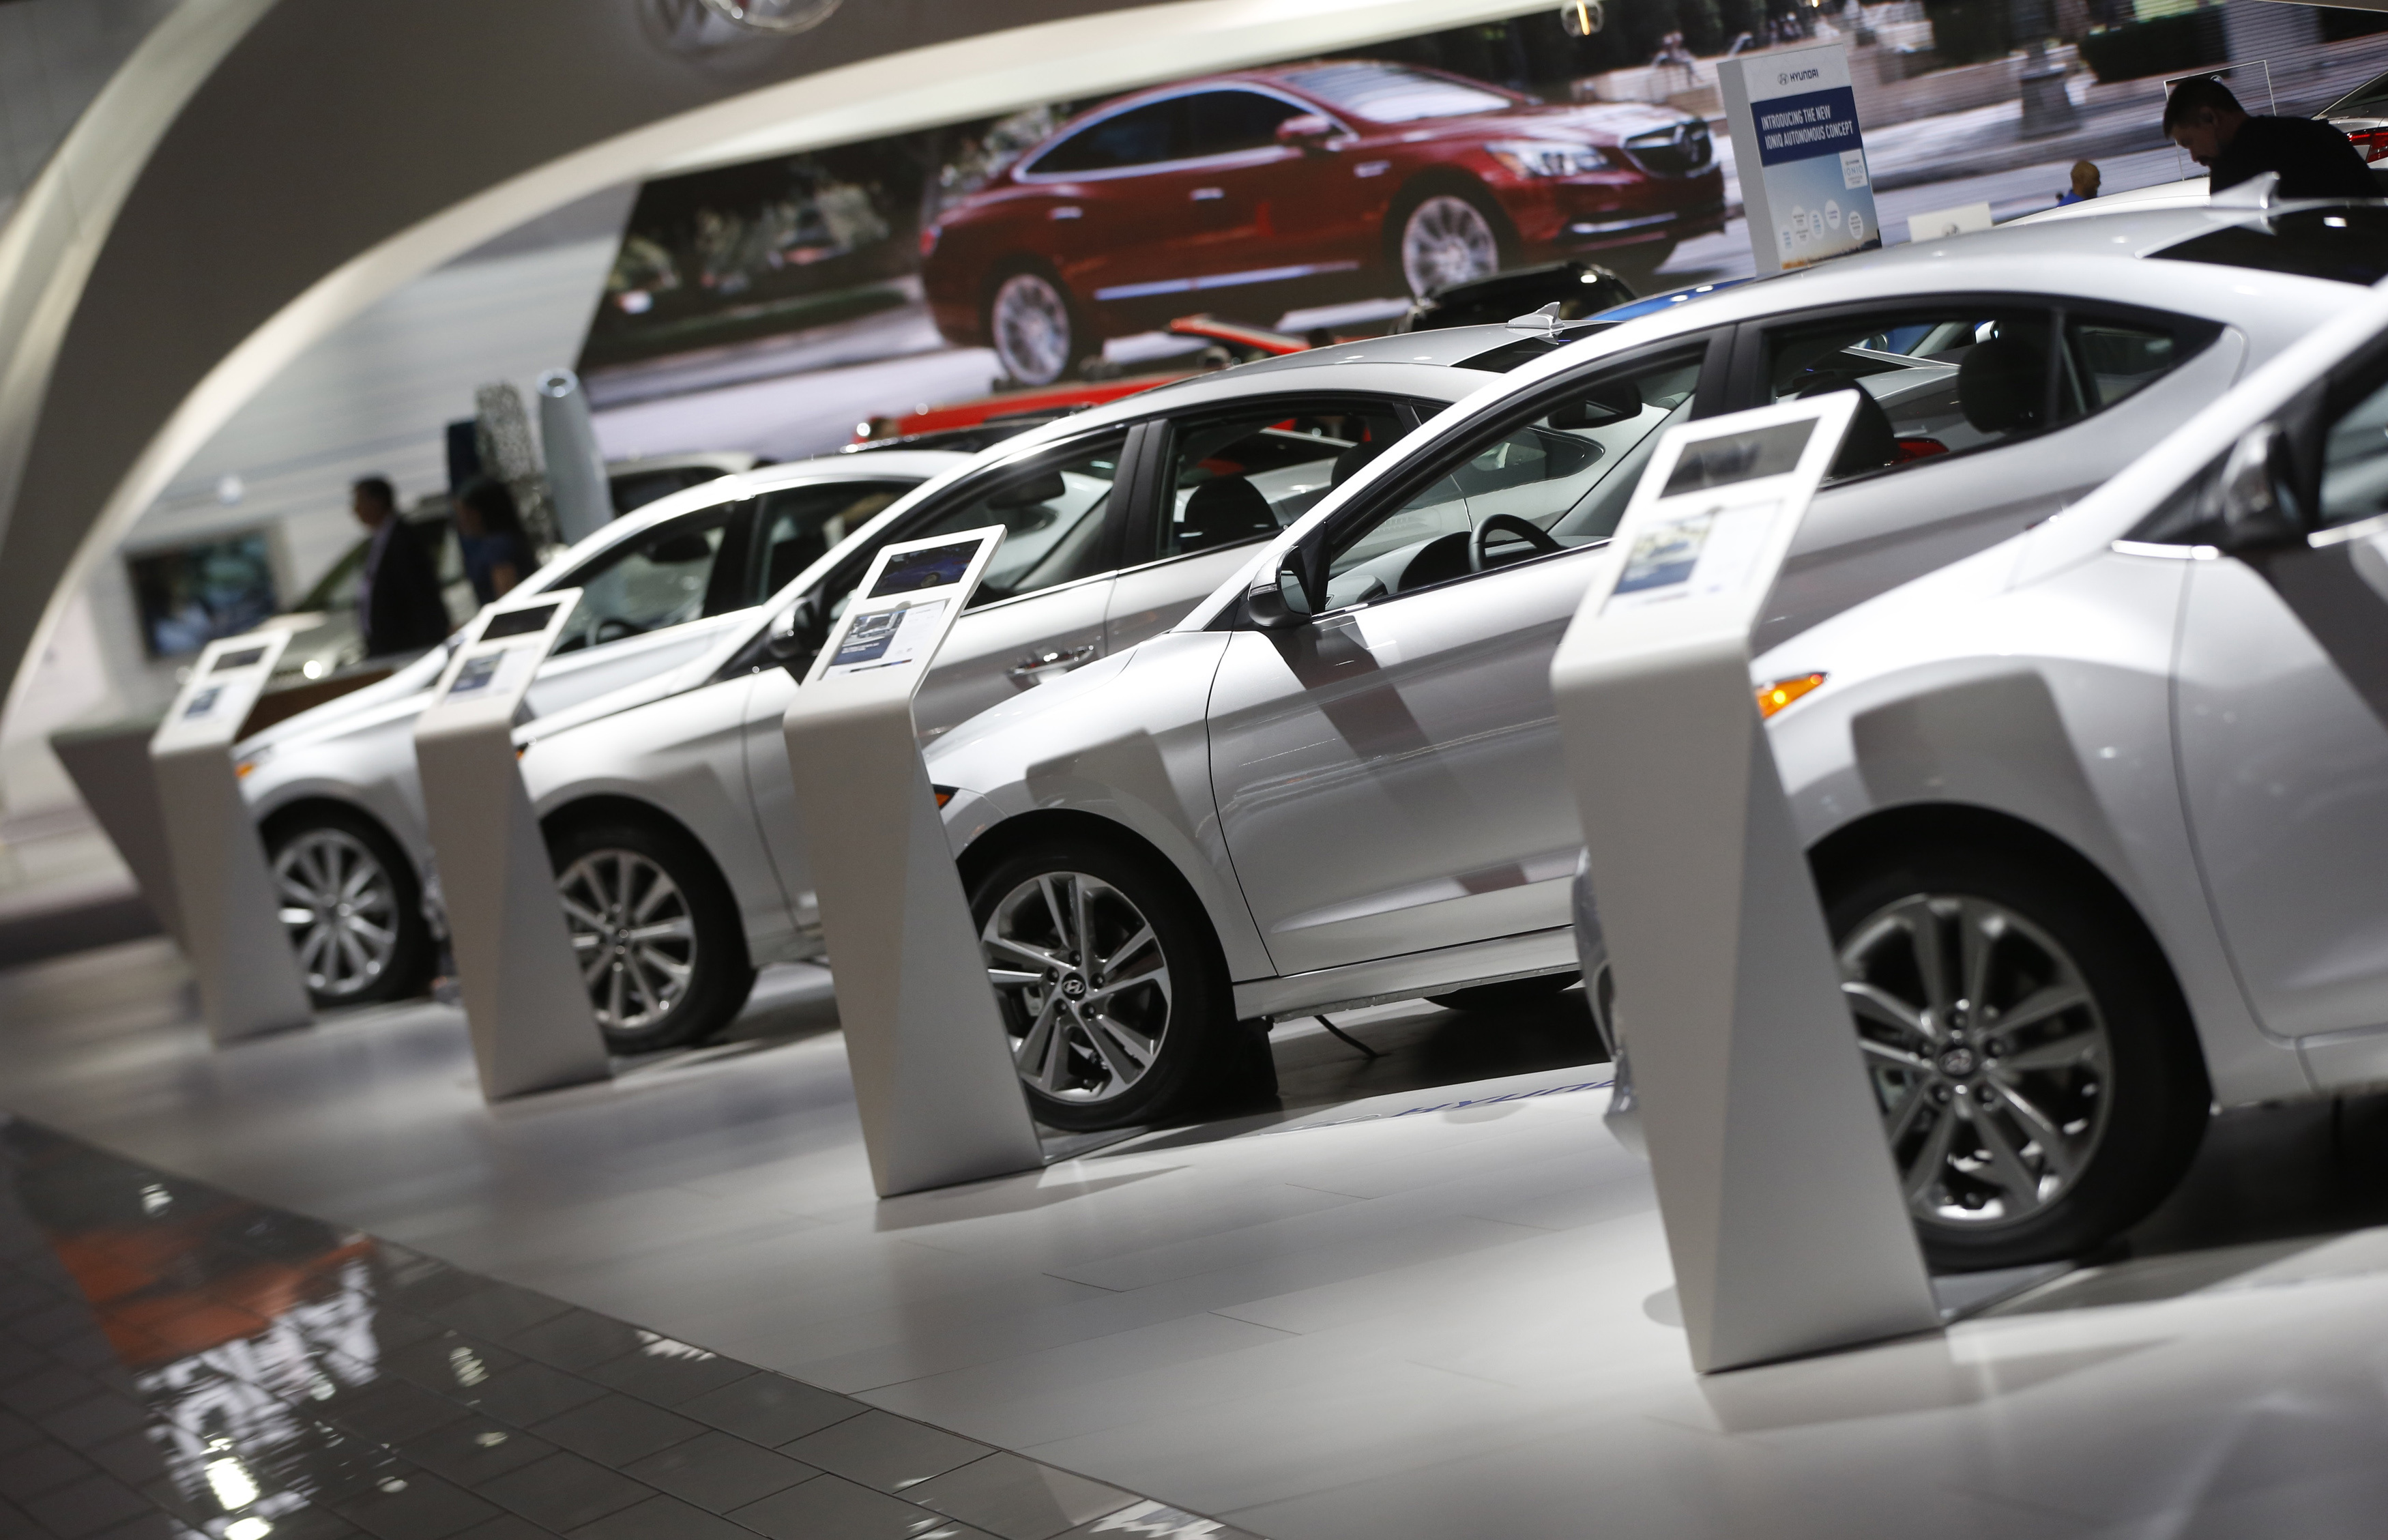 U.S. theft claims soar for Hyundai, Kia vehicles, non-profit group